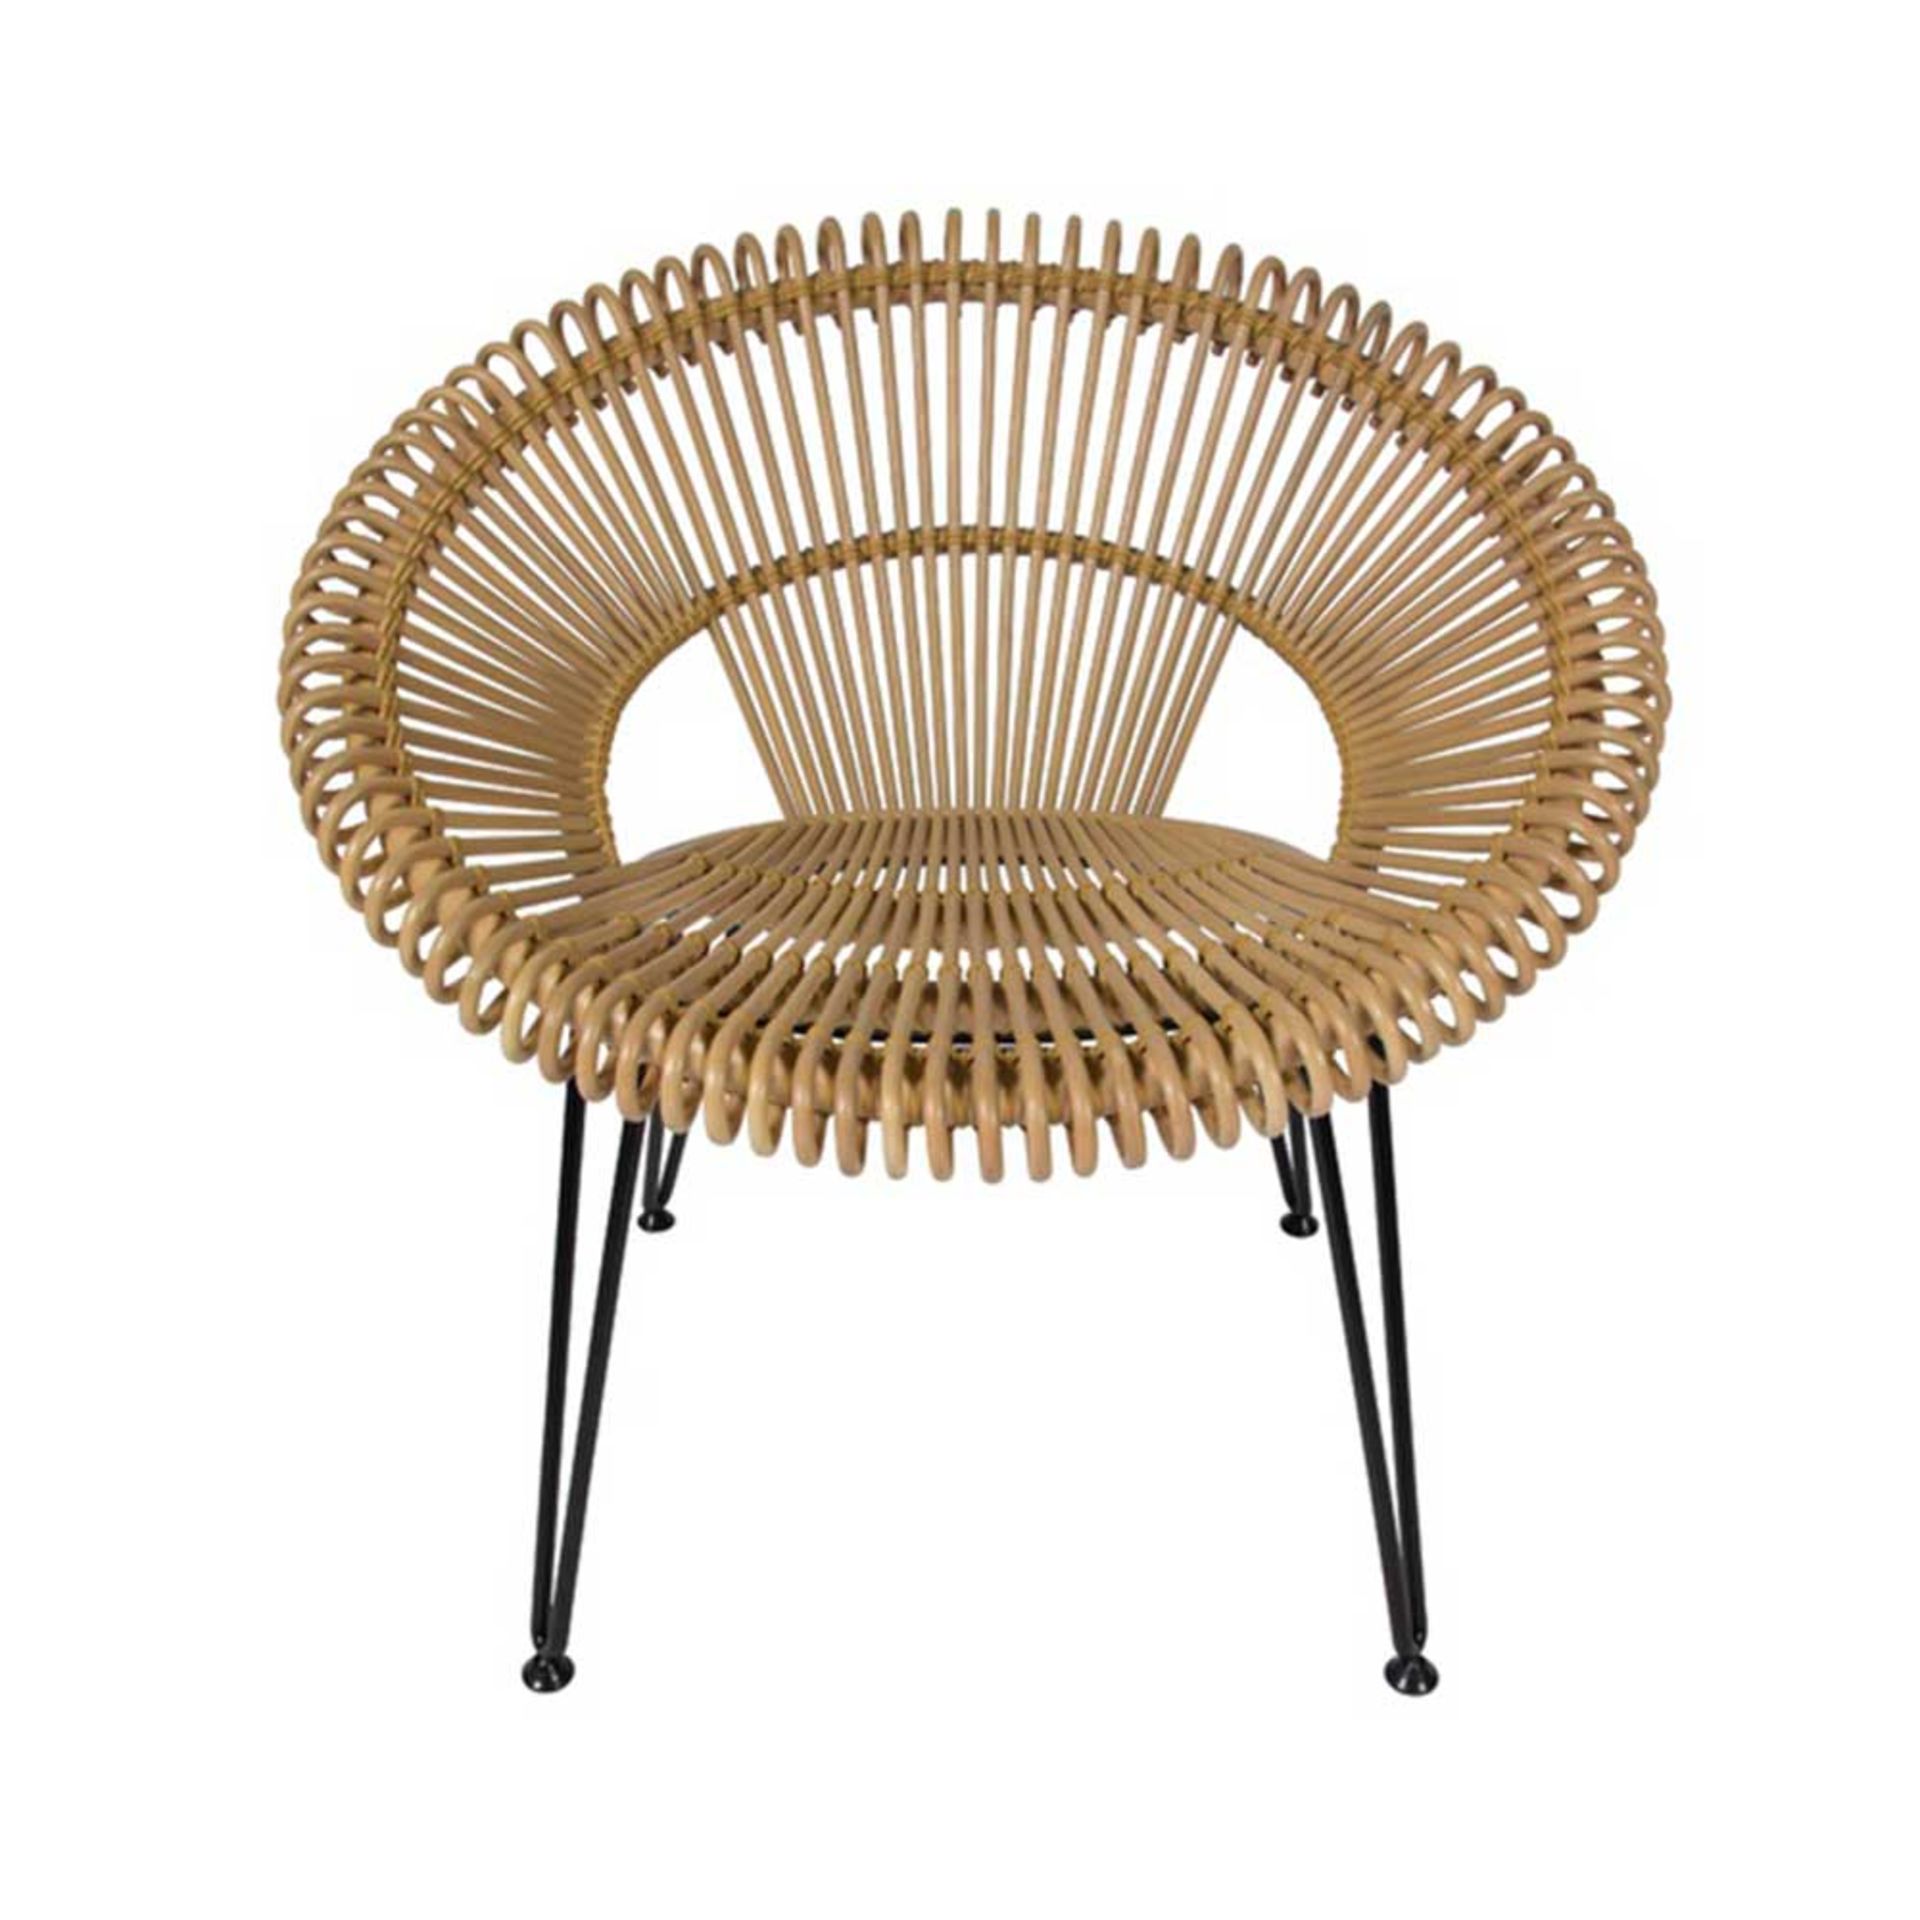 1 x Cruz Lazy Chair By Vincent Shepherd - Natural Rattan - For Contemporary Interiors - RRP £375! - Bild 3 aus 4